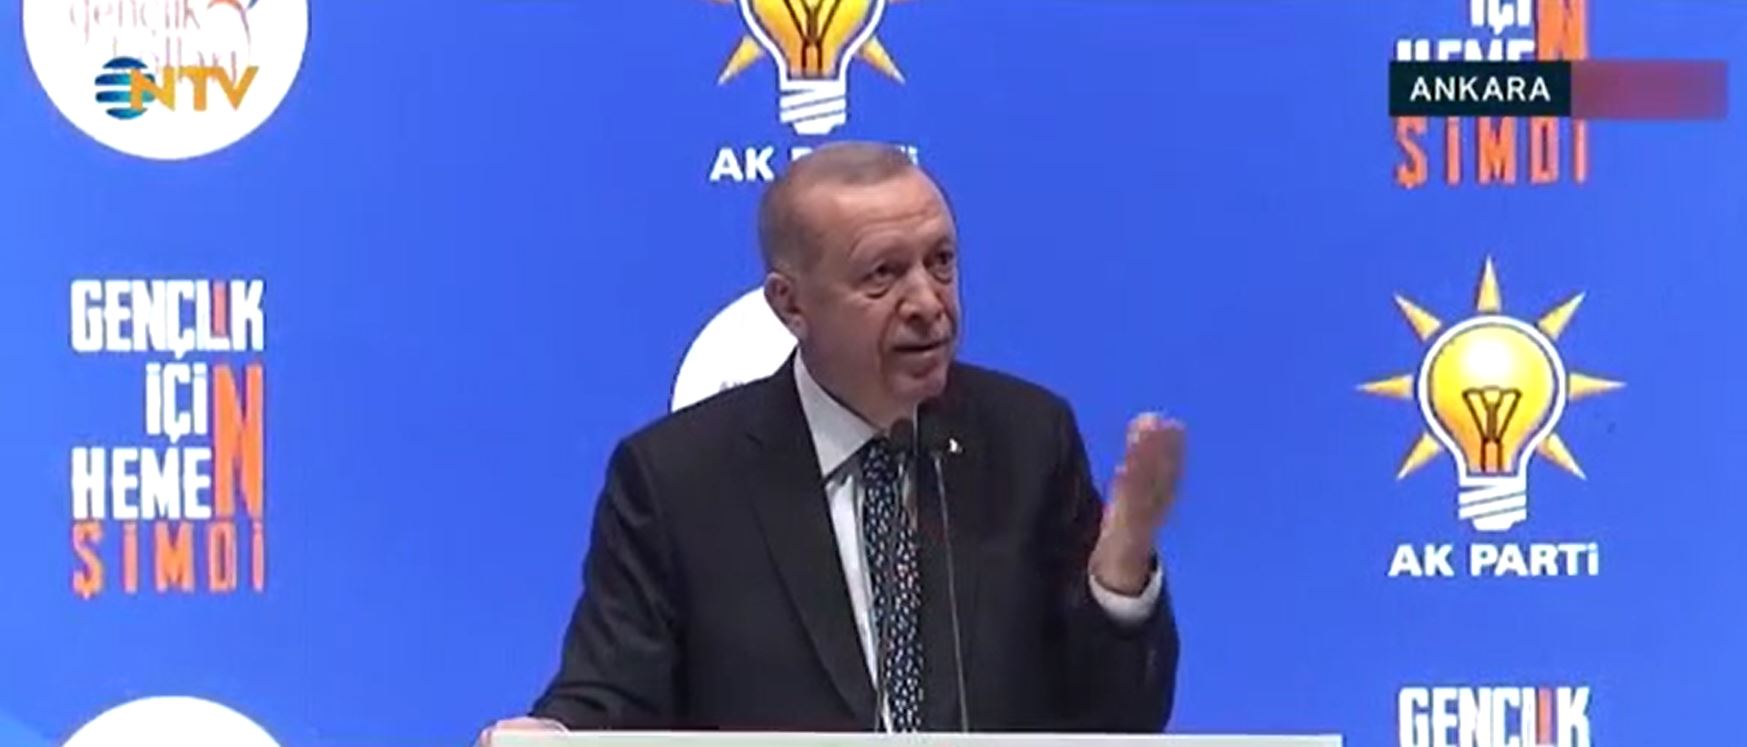 erdogan-ankara1-001.jpg